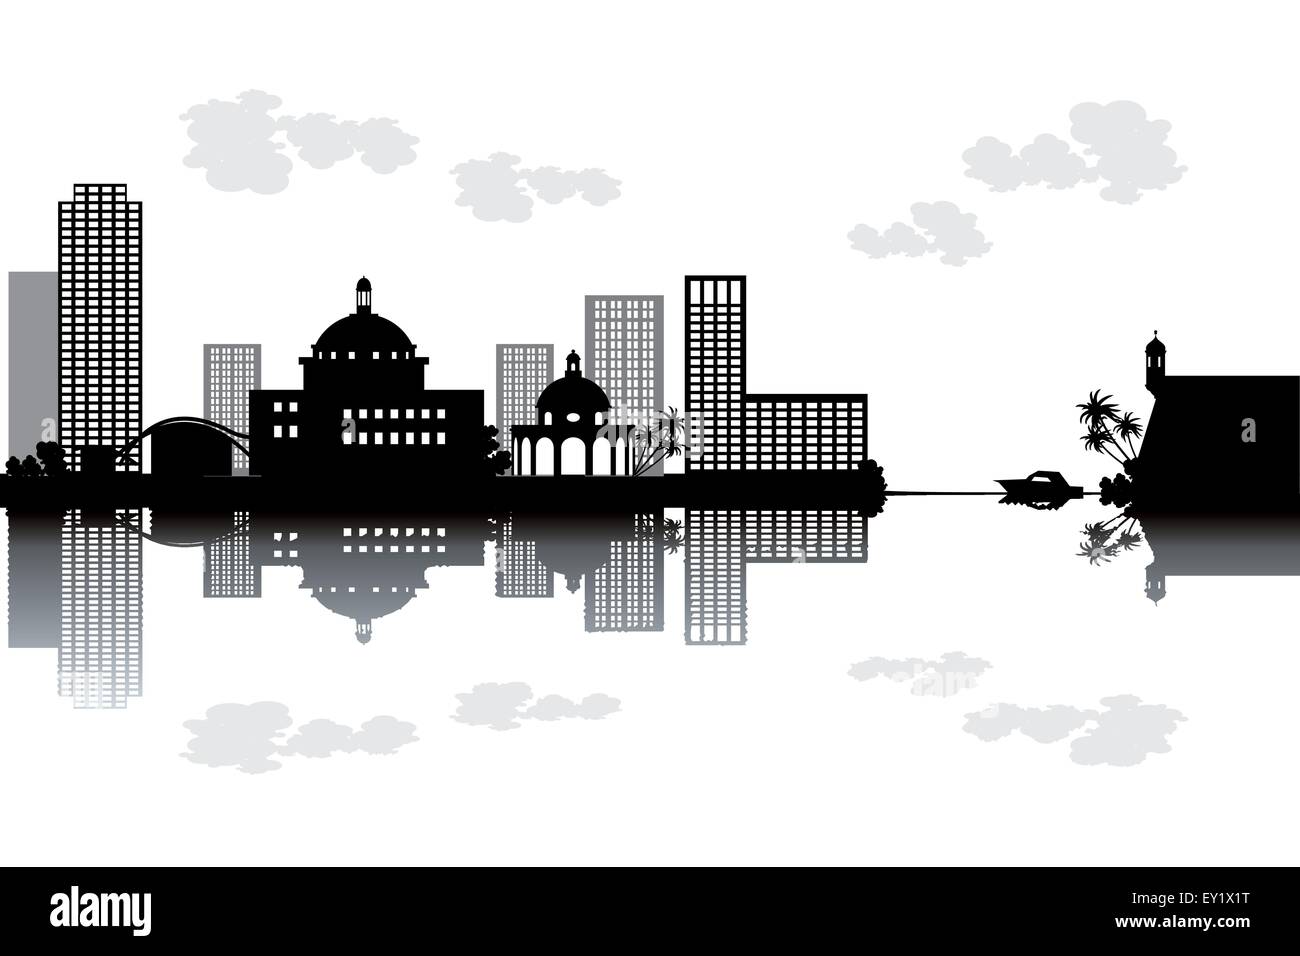 Puerto Rico skyline - black and white vector illustration Stock Vector